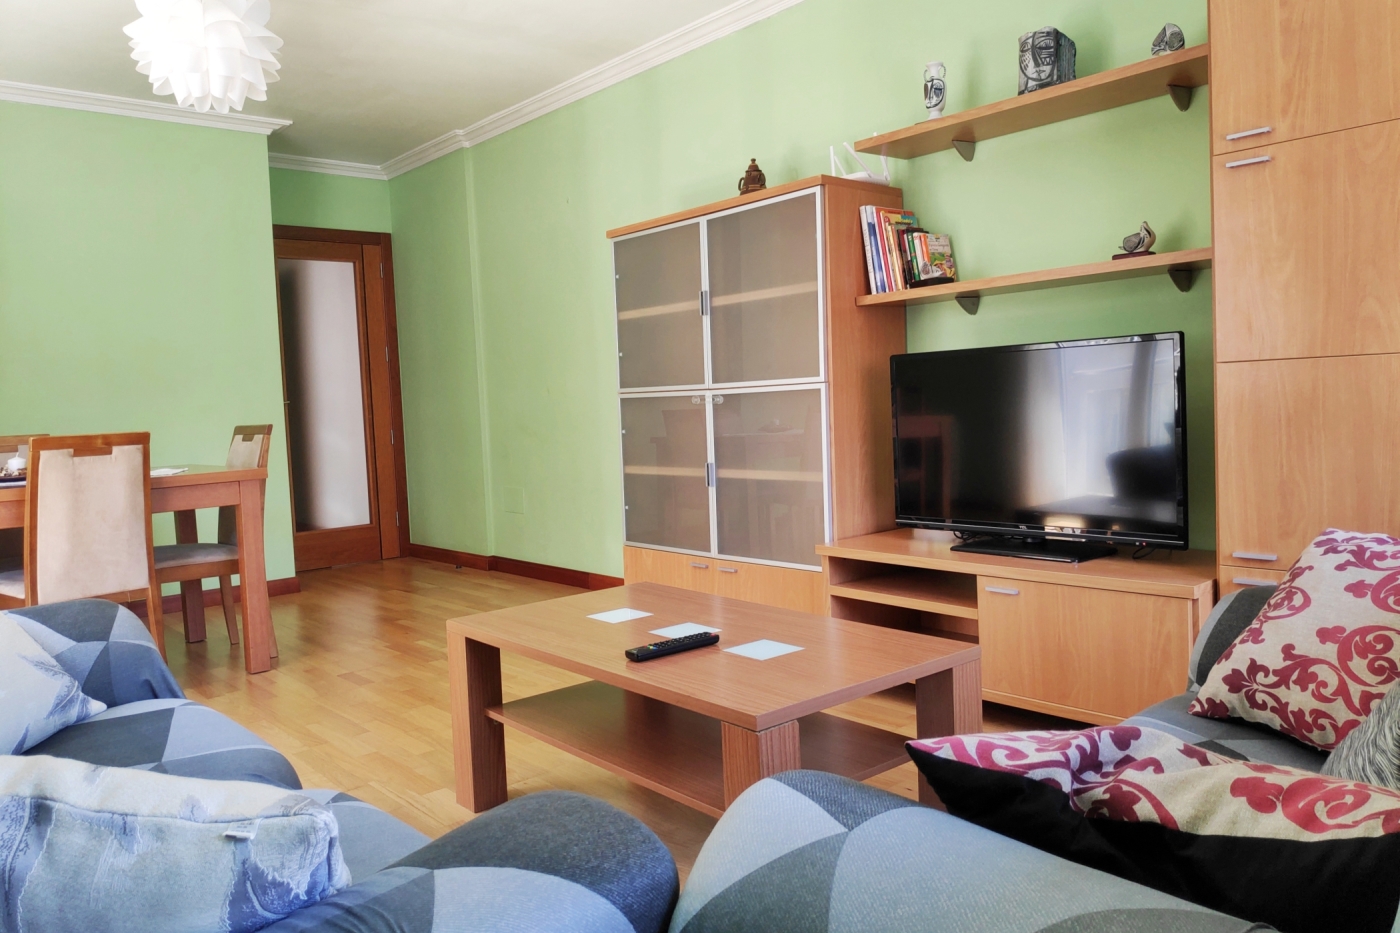 Apartamento Naval - Confortable para familias en Marín